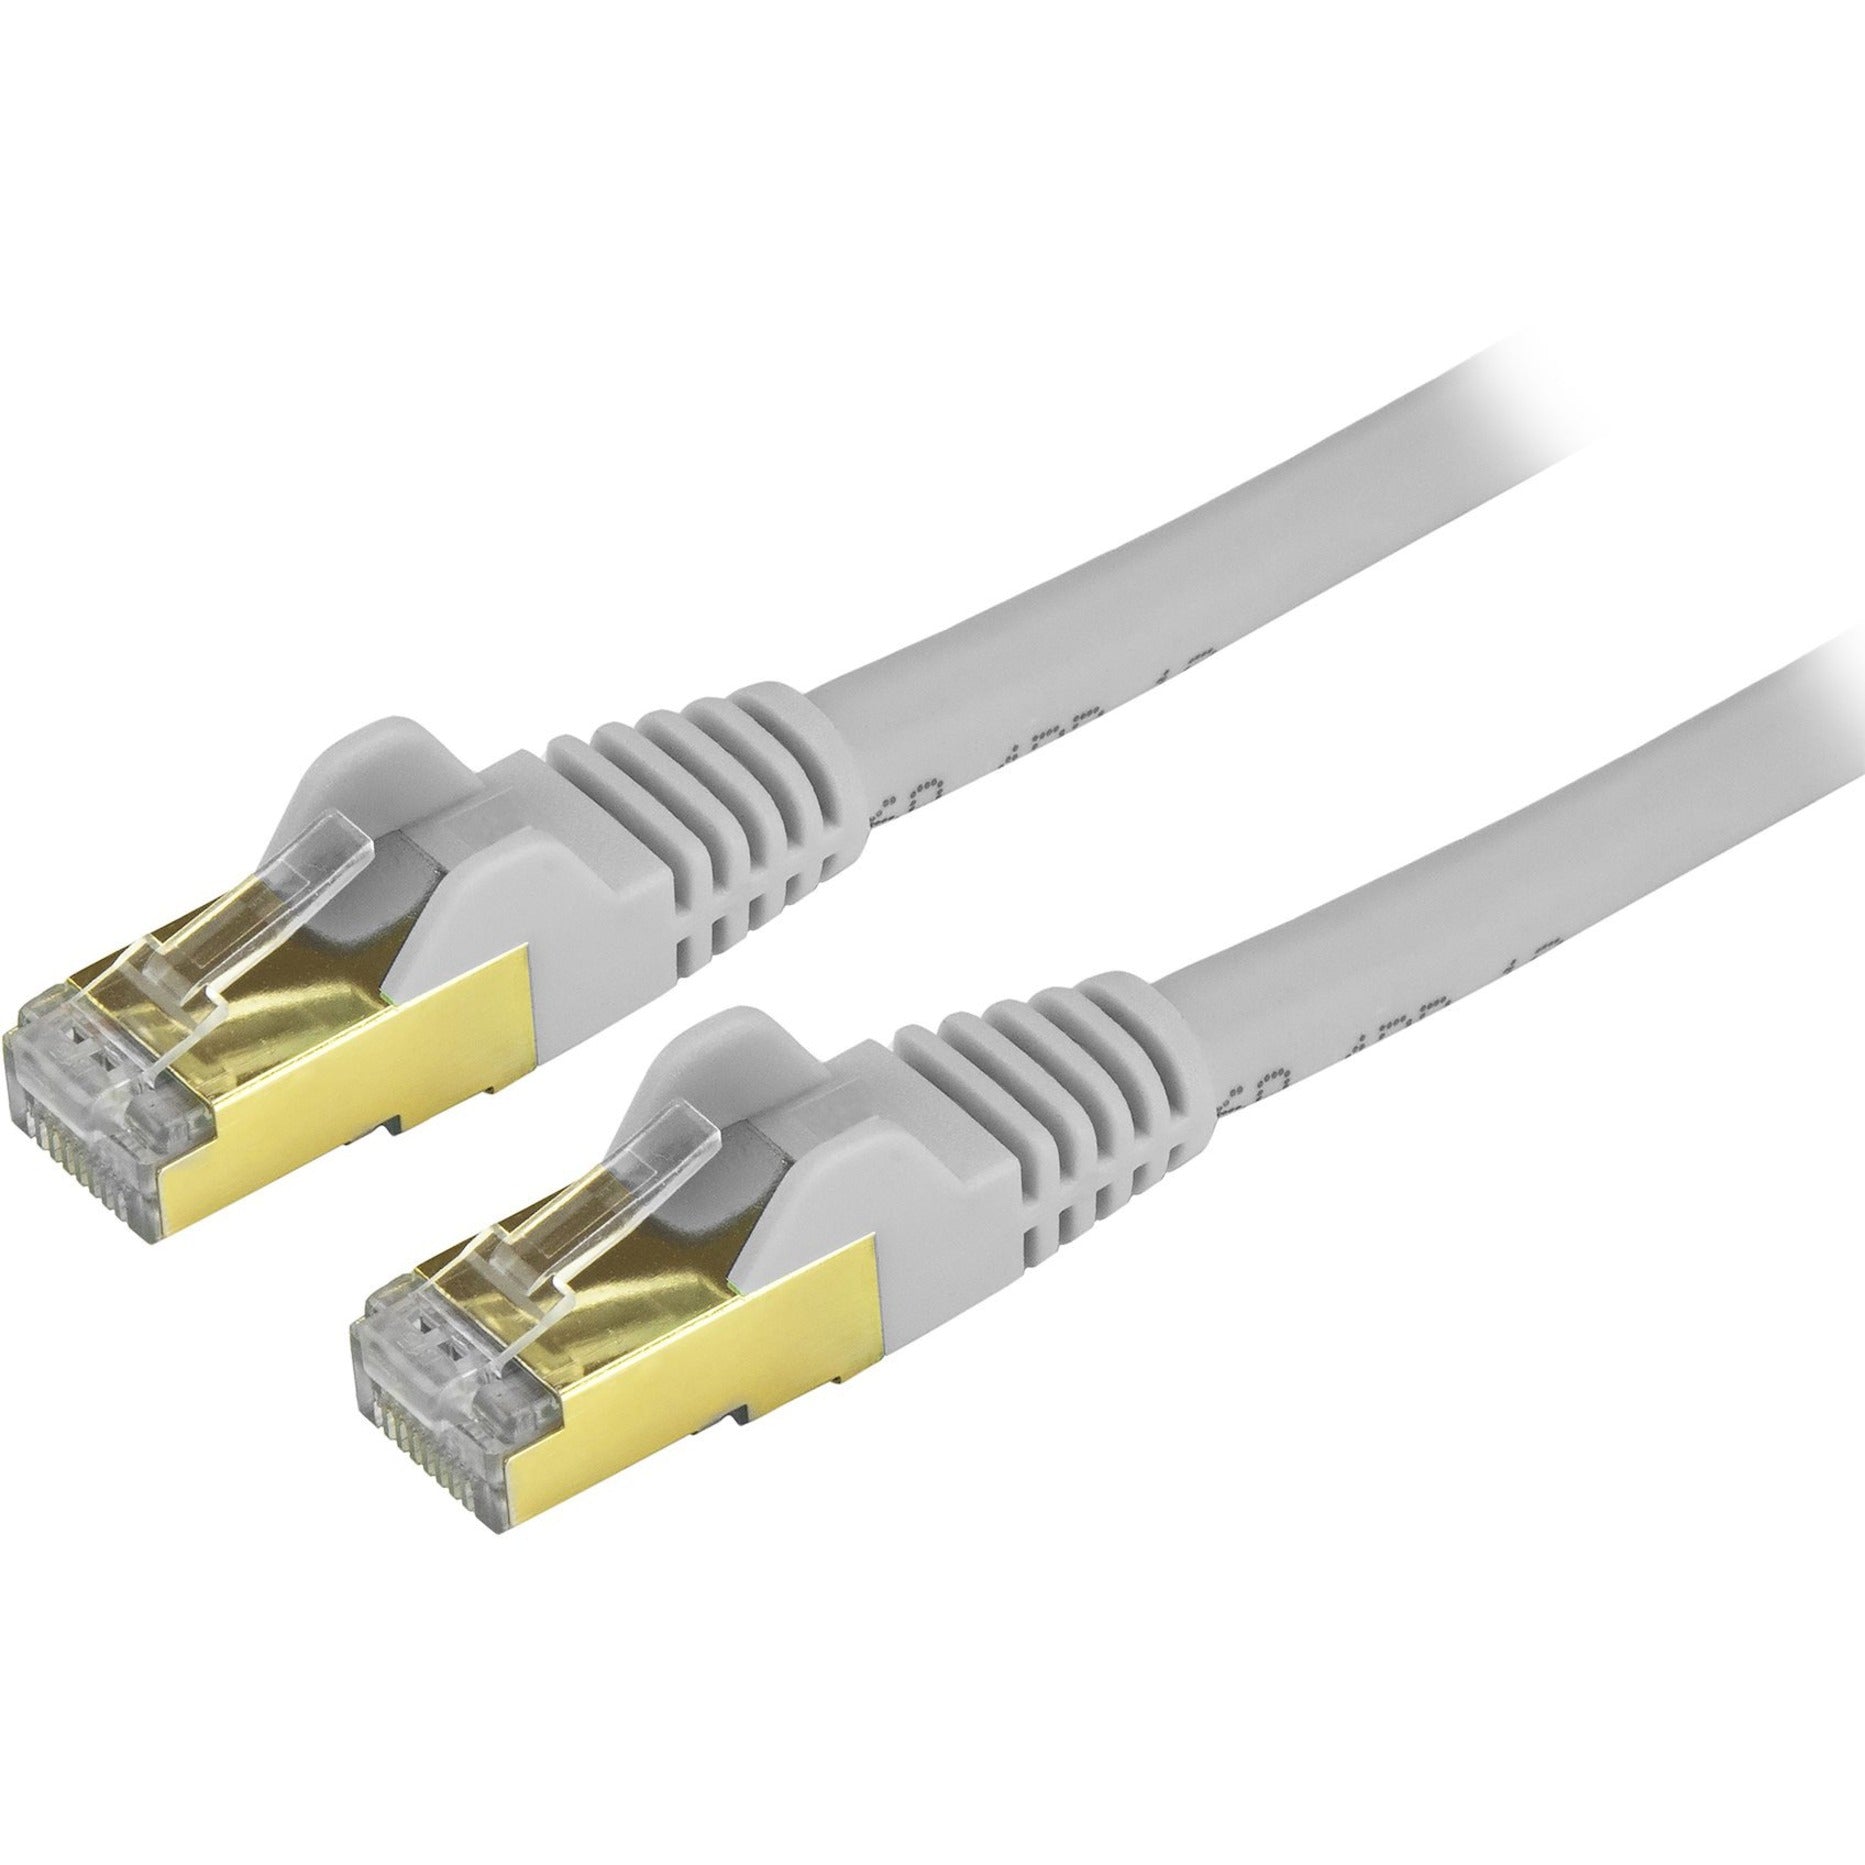 StarTech.com C6ASPAT2GR Cat6a Ethernet Patch Cable - Shielded (STP) - 2 ft., Gray, Snagless RJ45 Ethernet Cord